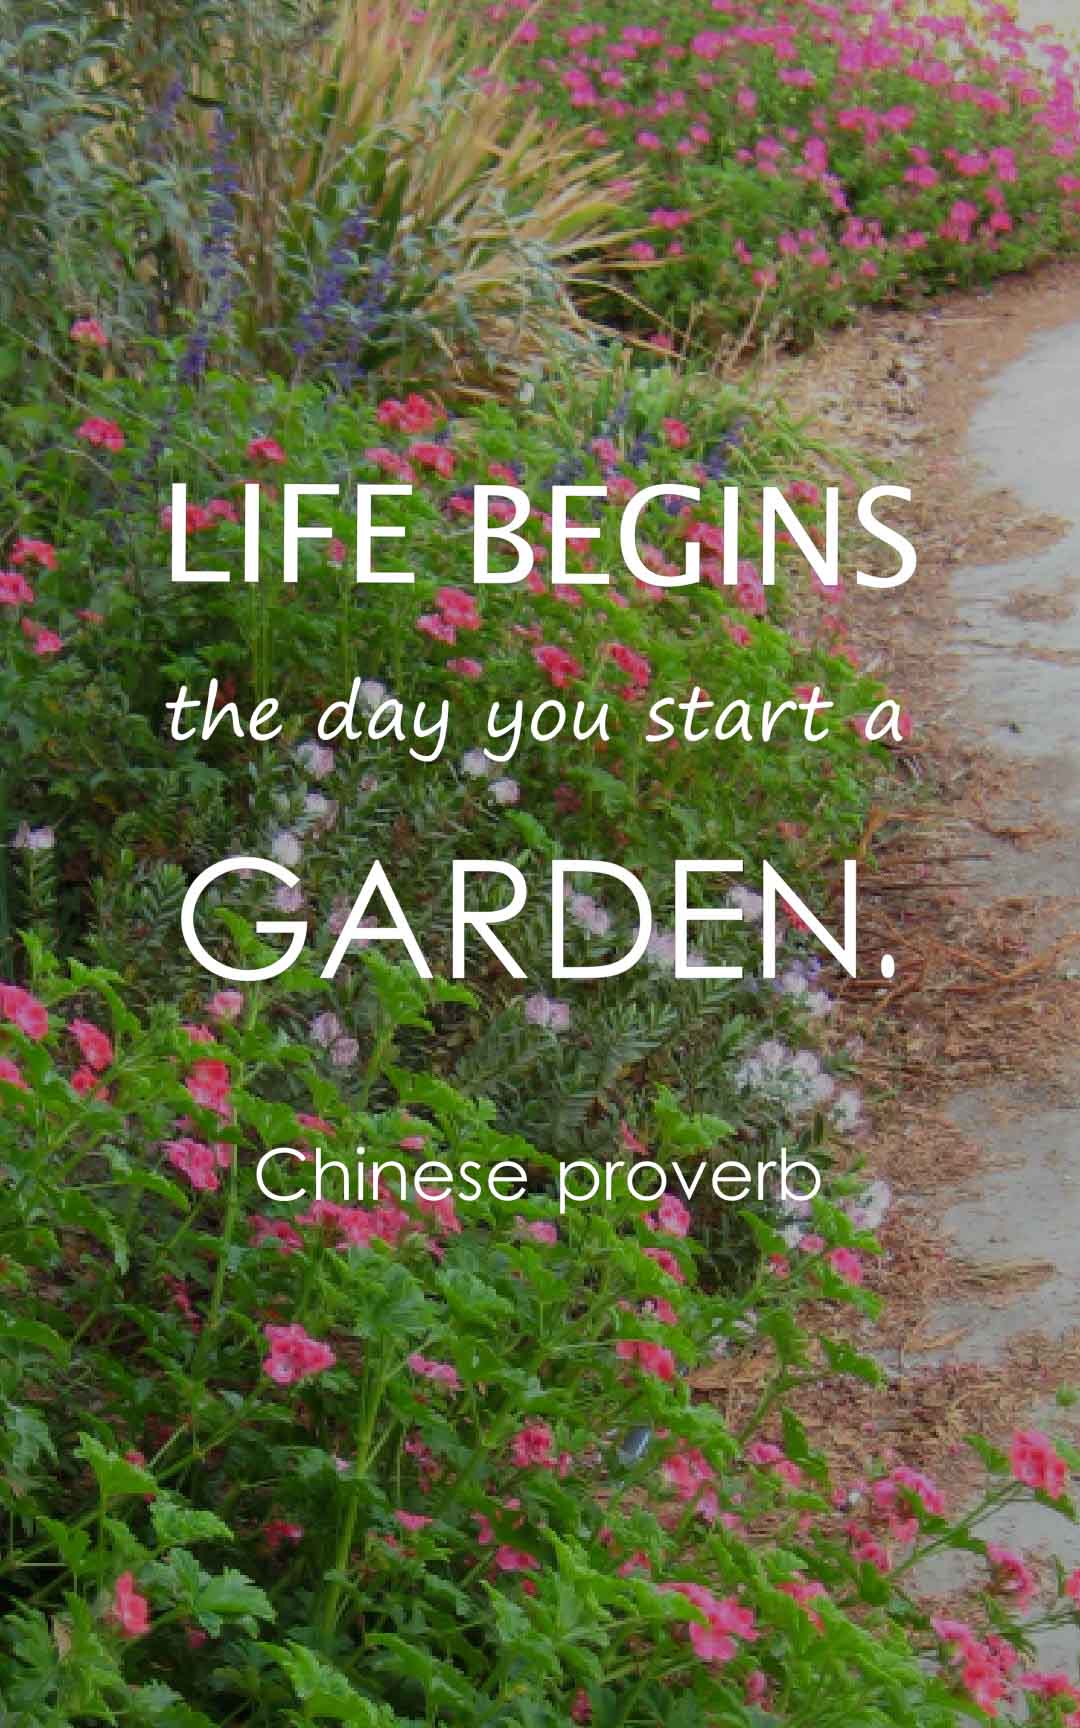 Life begins the day you start a garden.